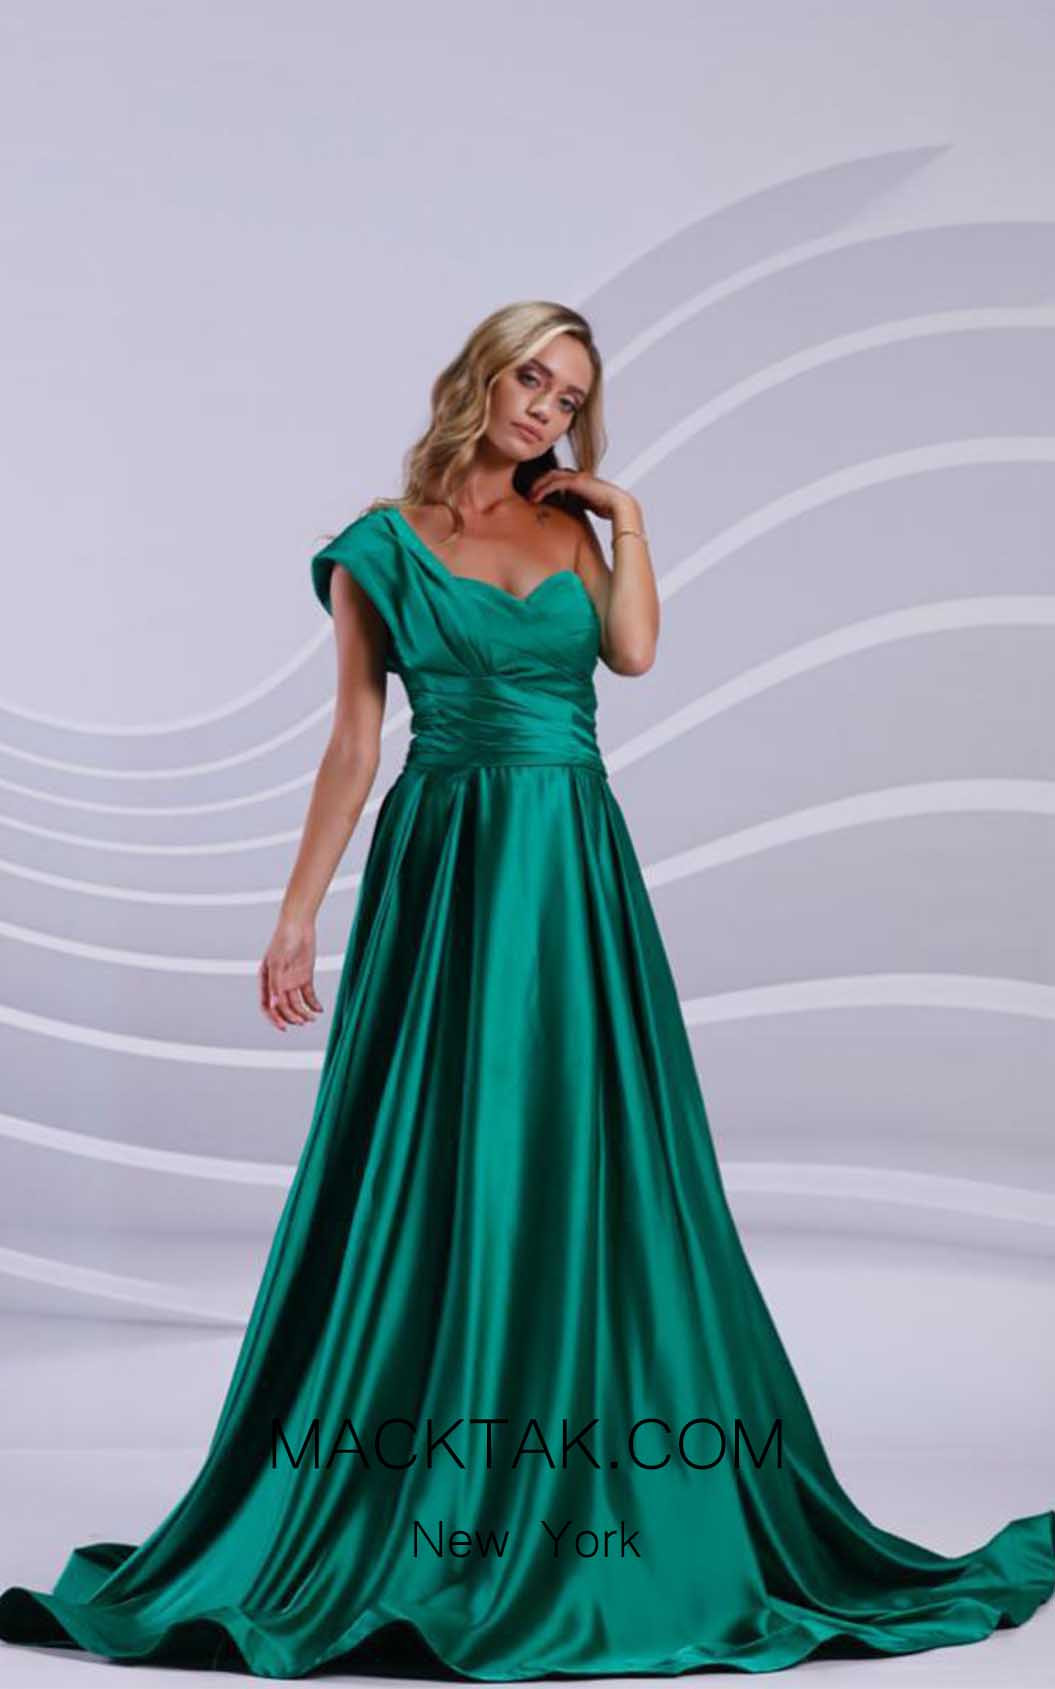 MackTak Couture 054 Dress